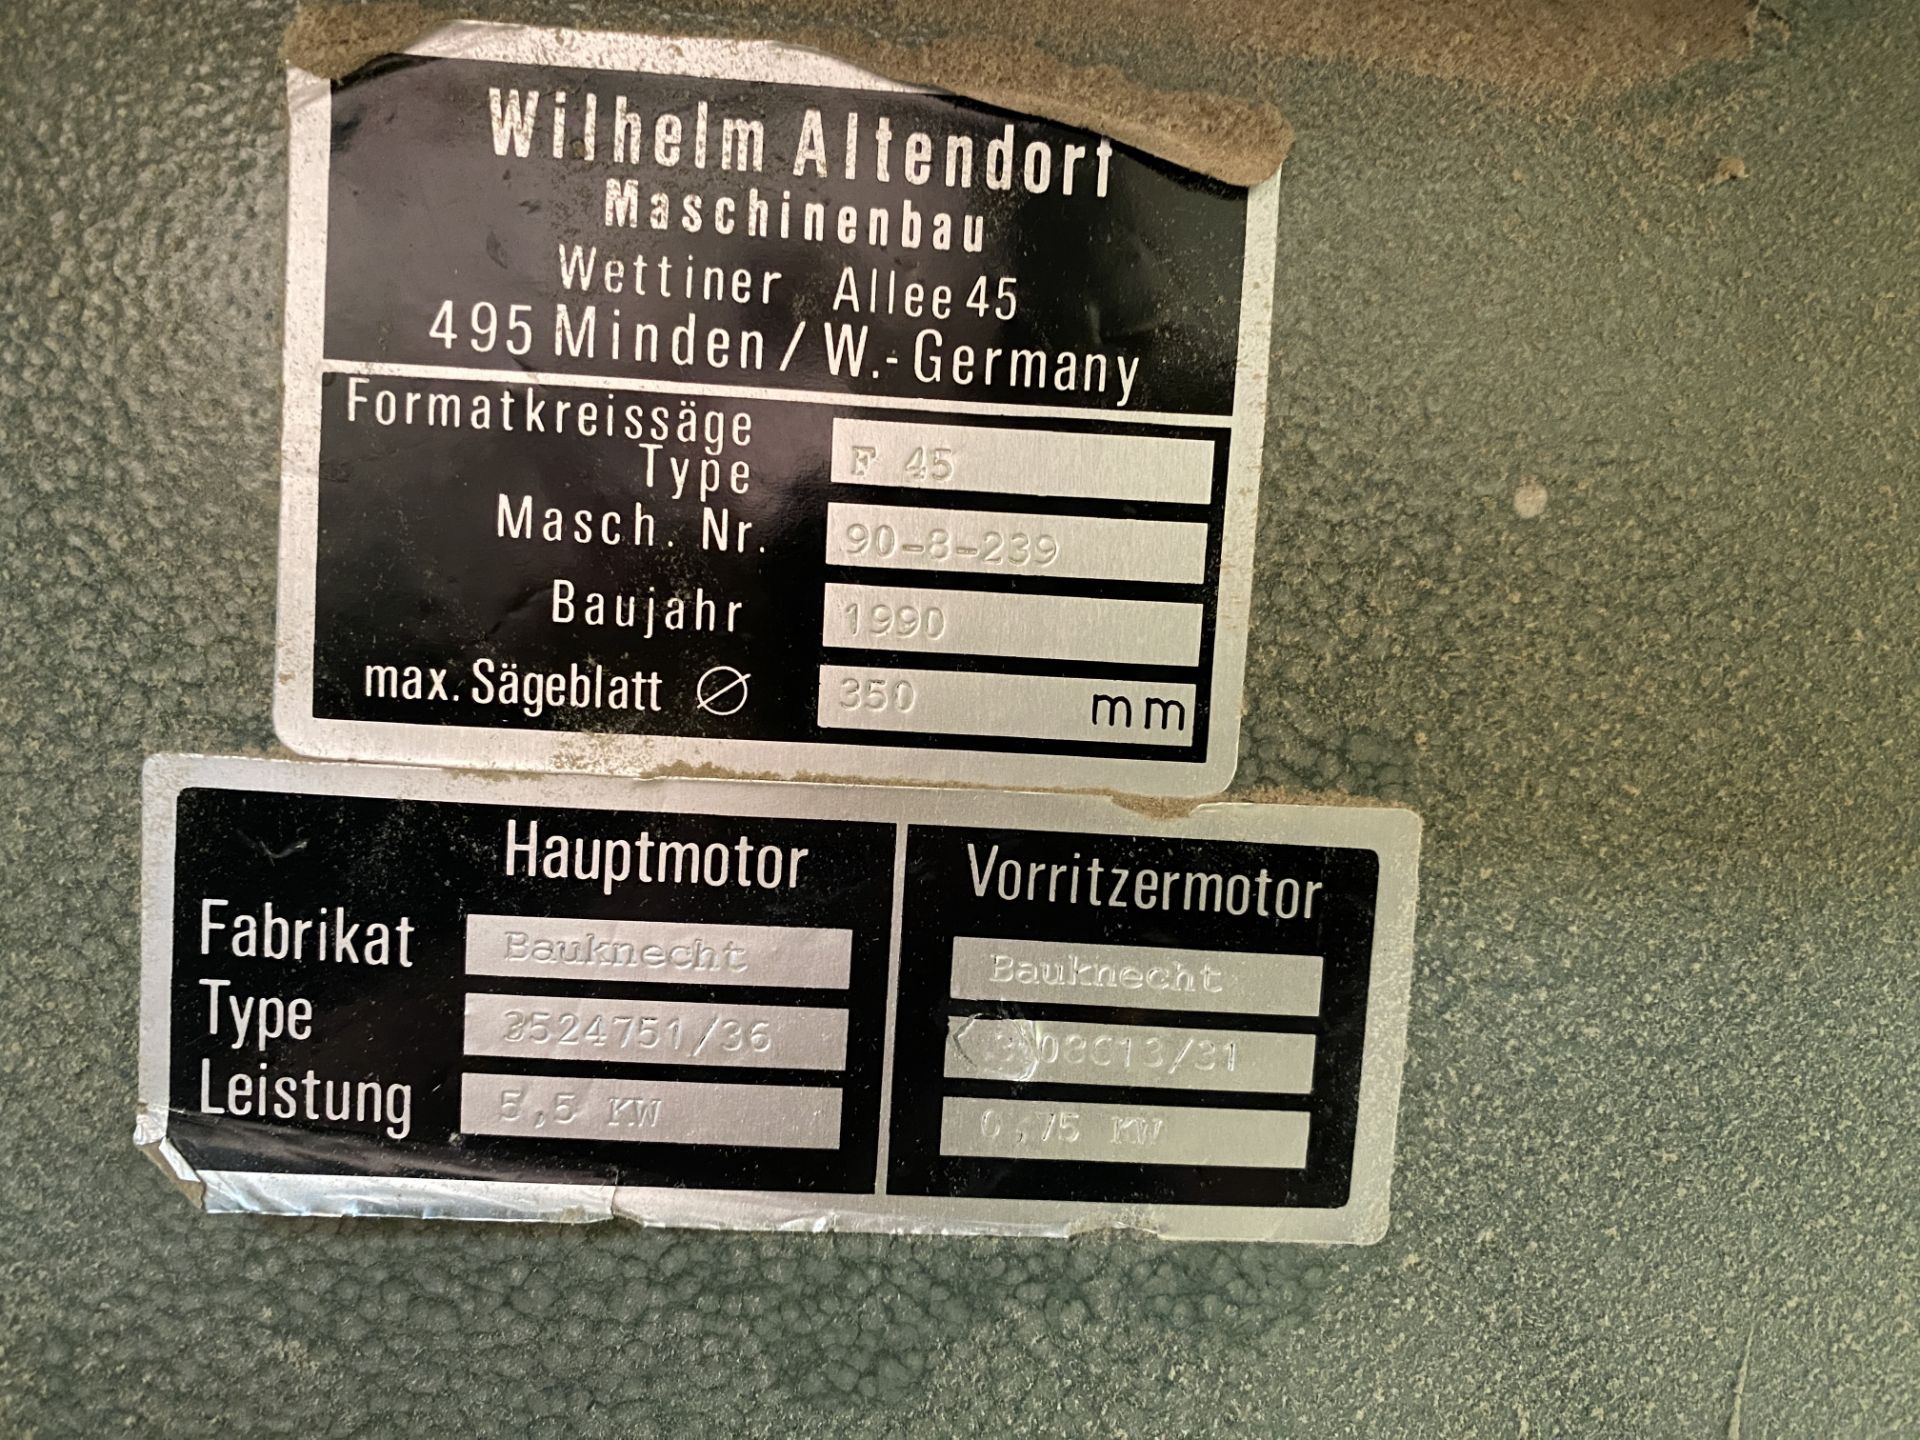 Altendorf F-45 Panel Saw. Bed dimensions 2.4m x 2.4m Machine no. 90-8-239 (YOM 1990). - Image 7 of 10